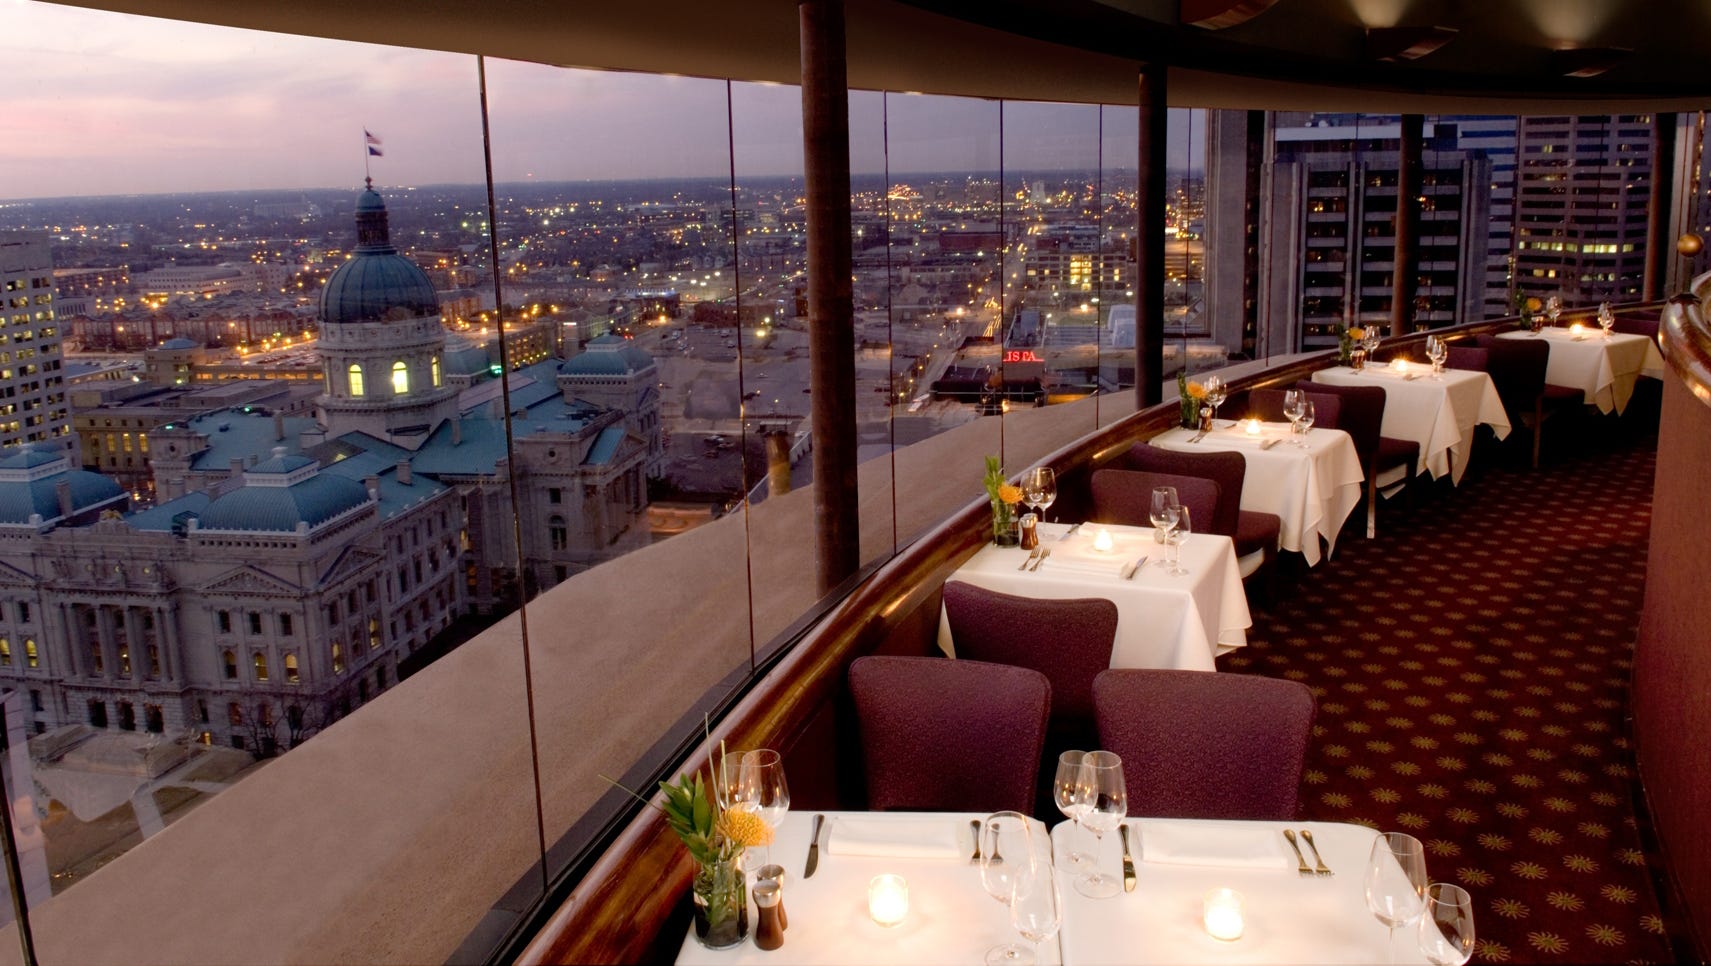 Romantic restaurants in Indianapolis: 14 fancy date nights